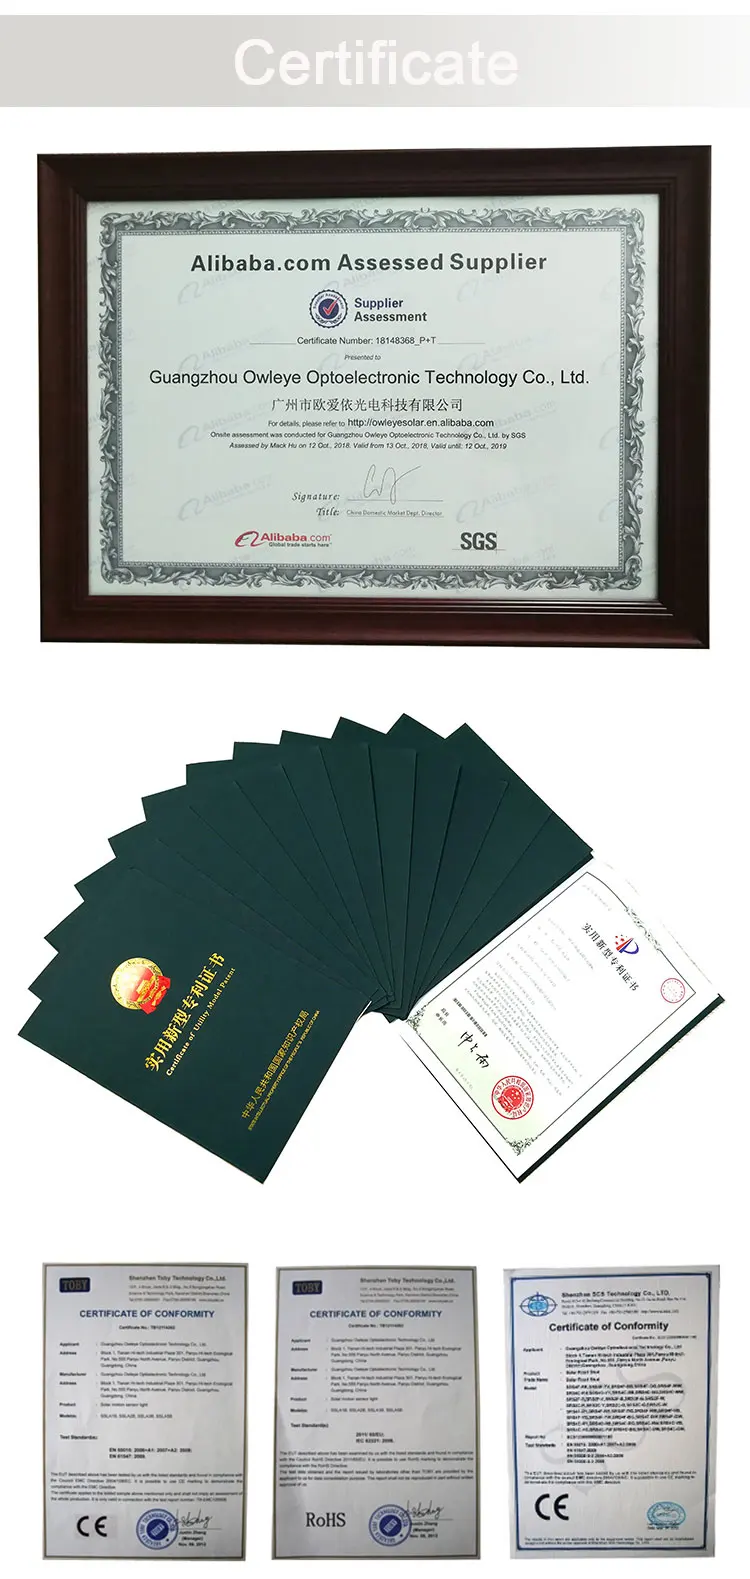 certificate_02.jpg